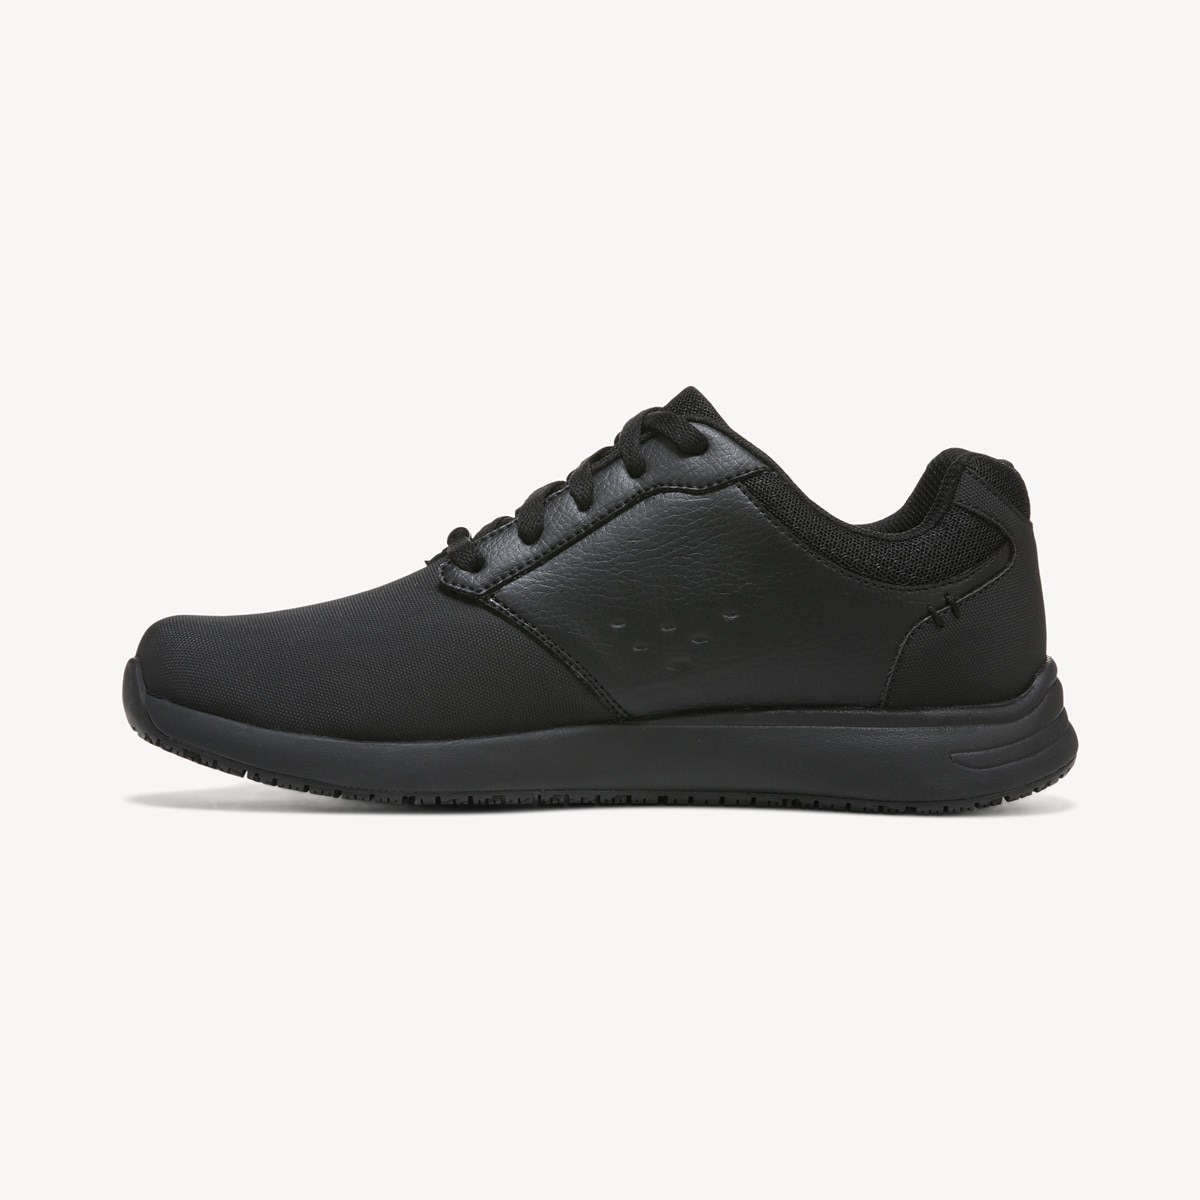 Intrepid Slip Resistant Sneaker in Black | Work | Dr Scholls Shoes